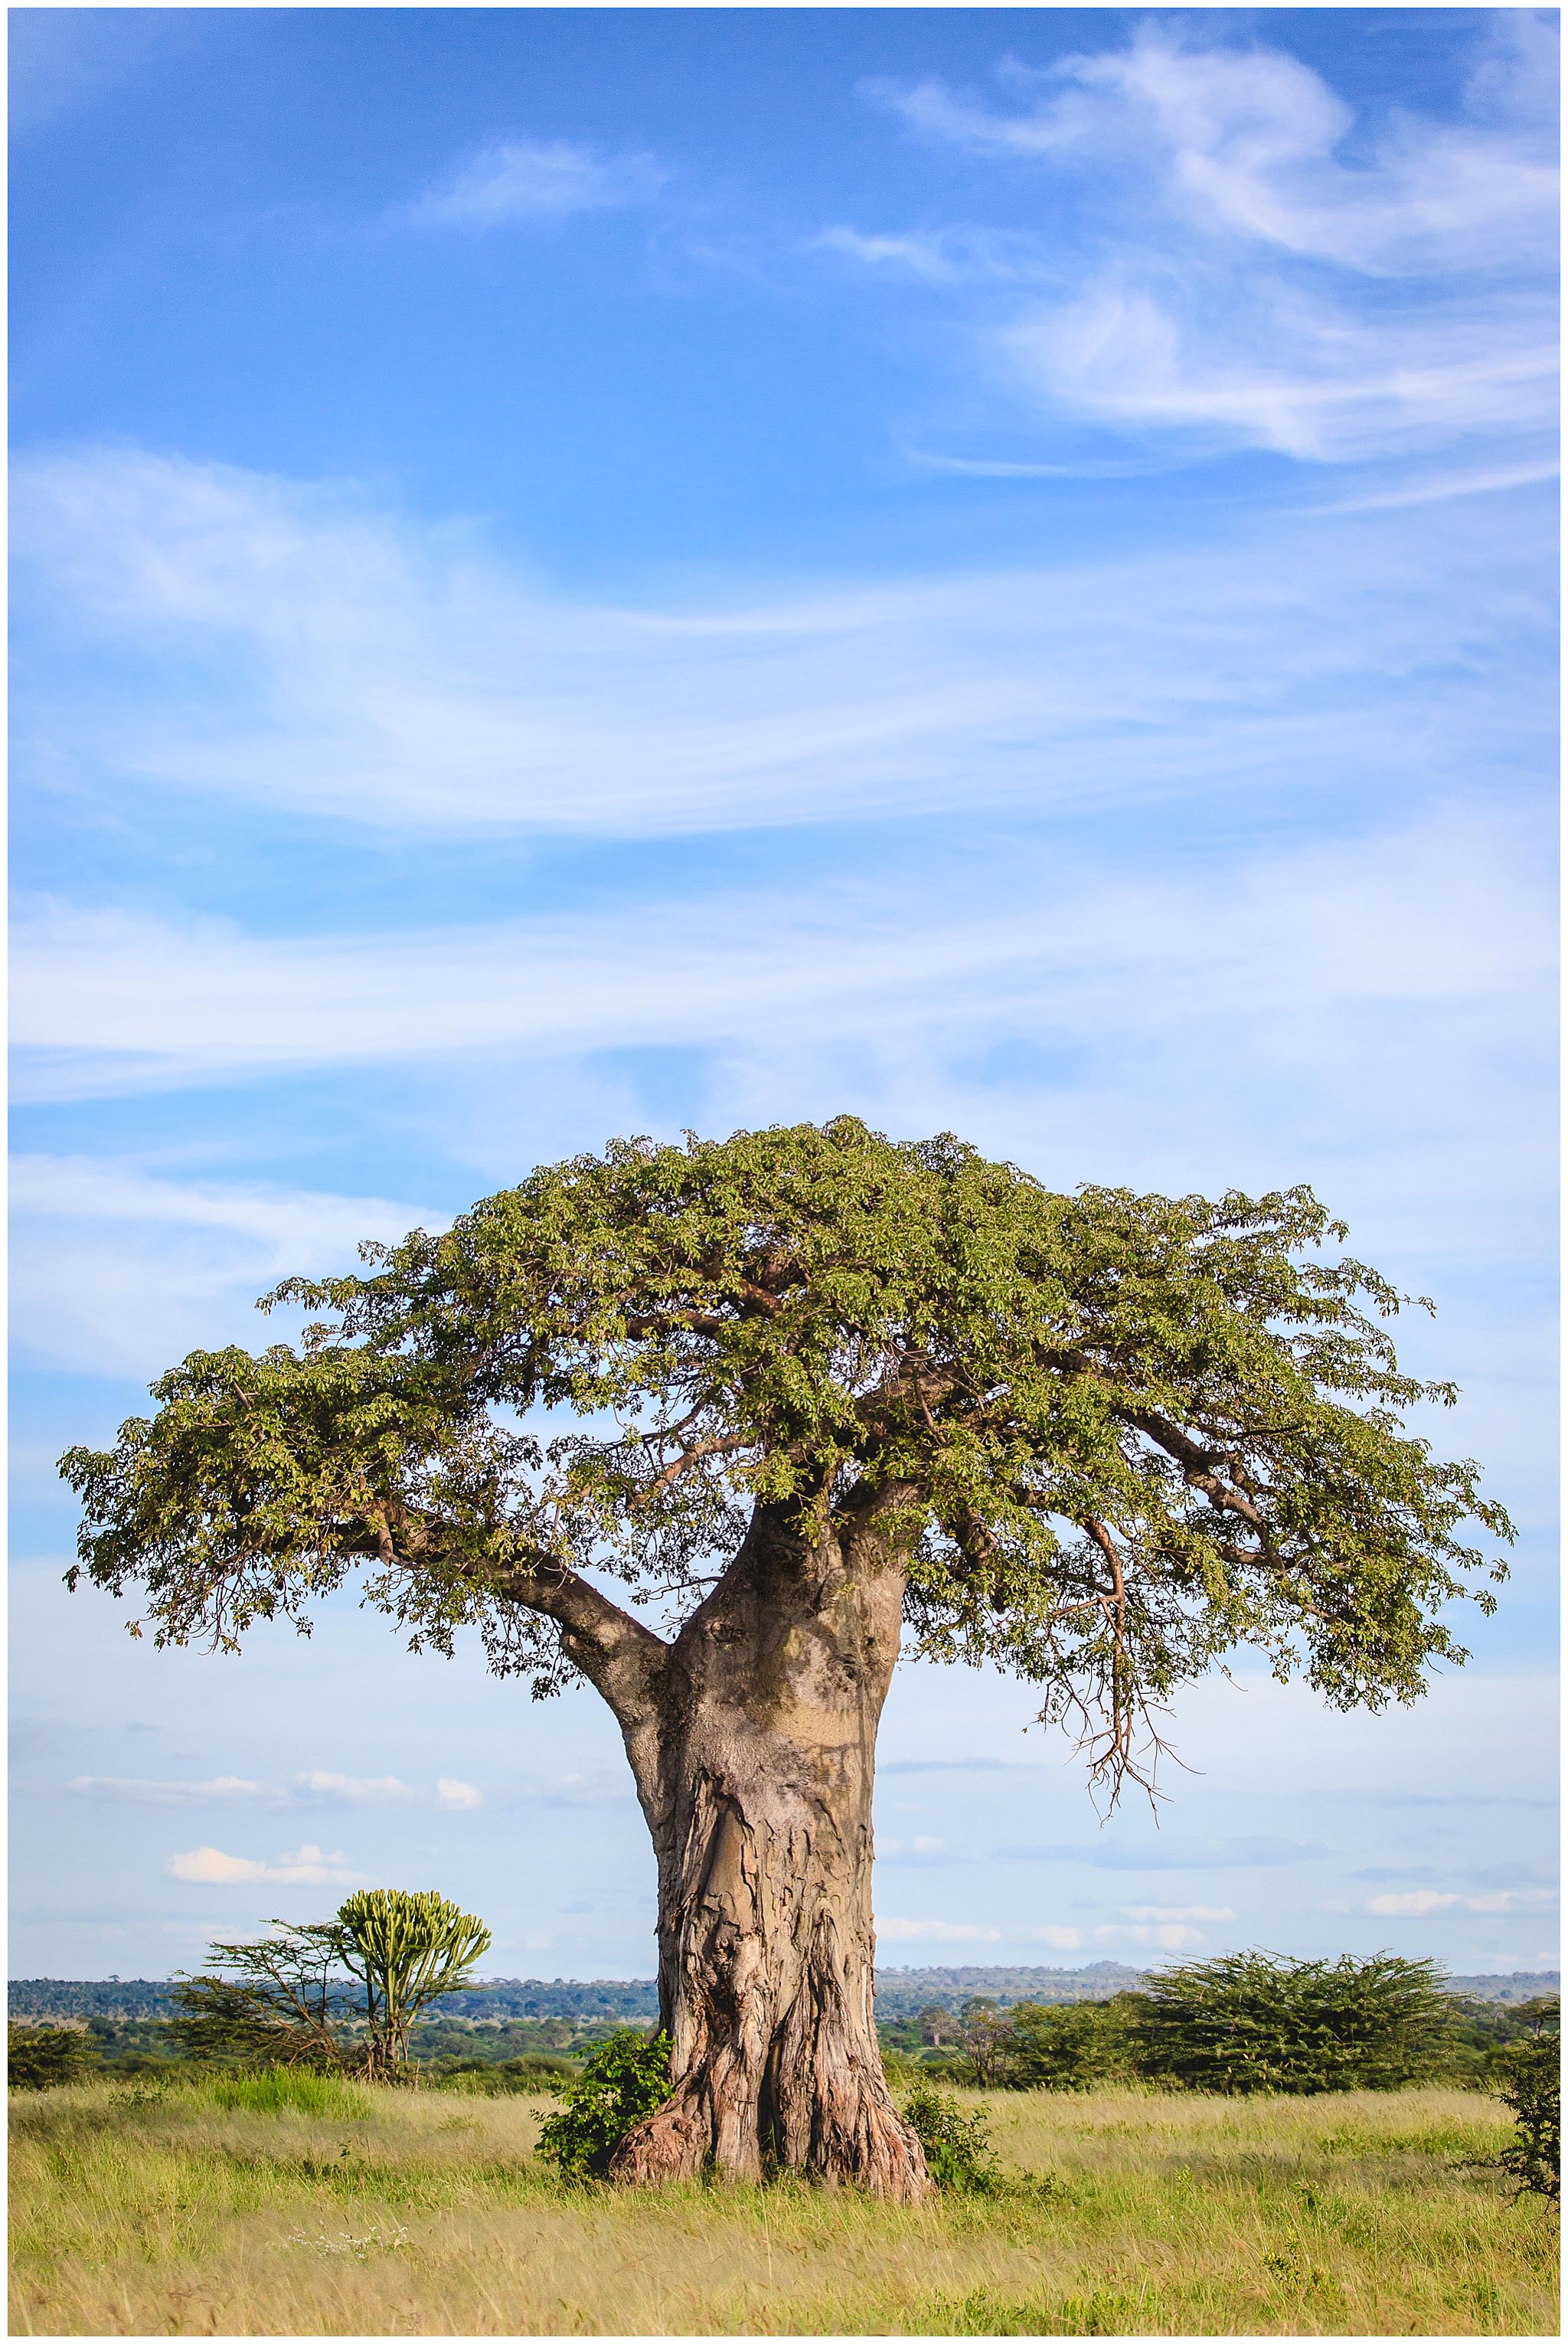 Baobab tree in Tarangire National Park, Tanzania, Africa